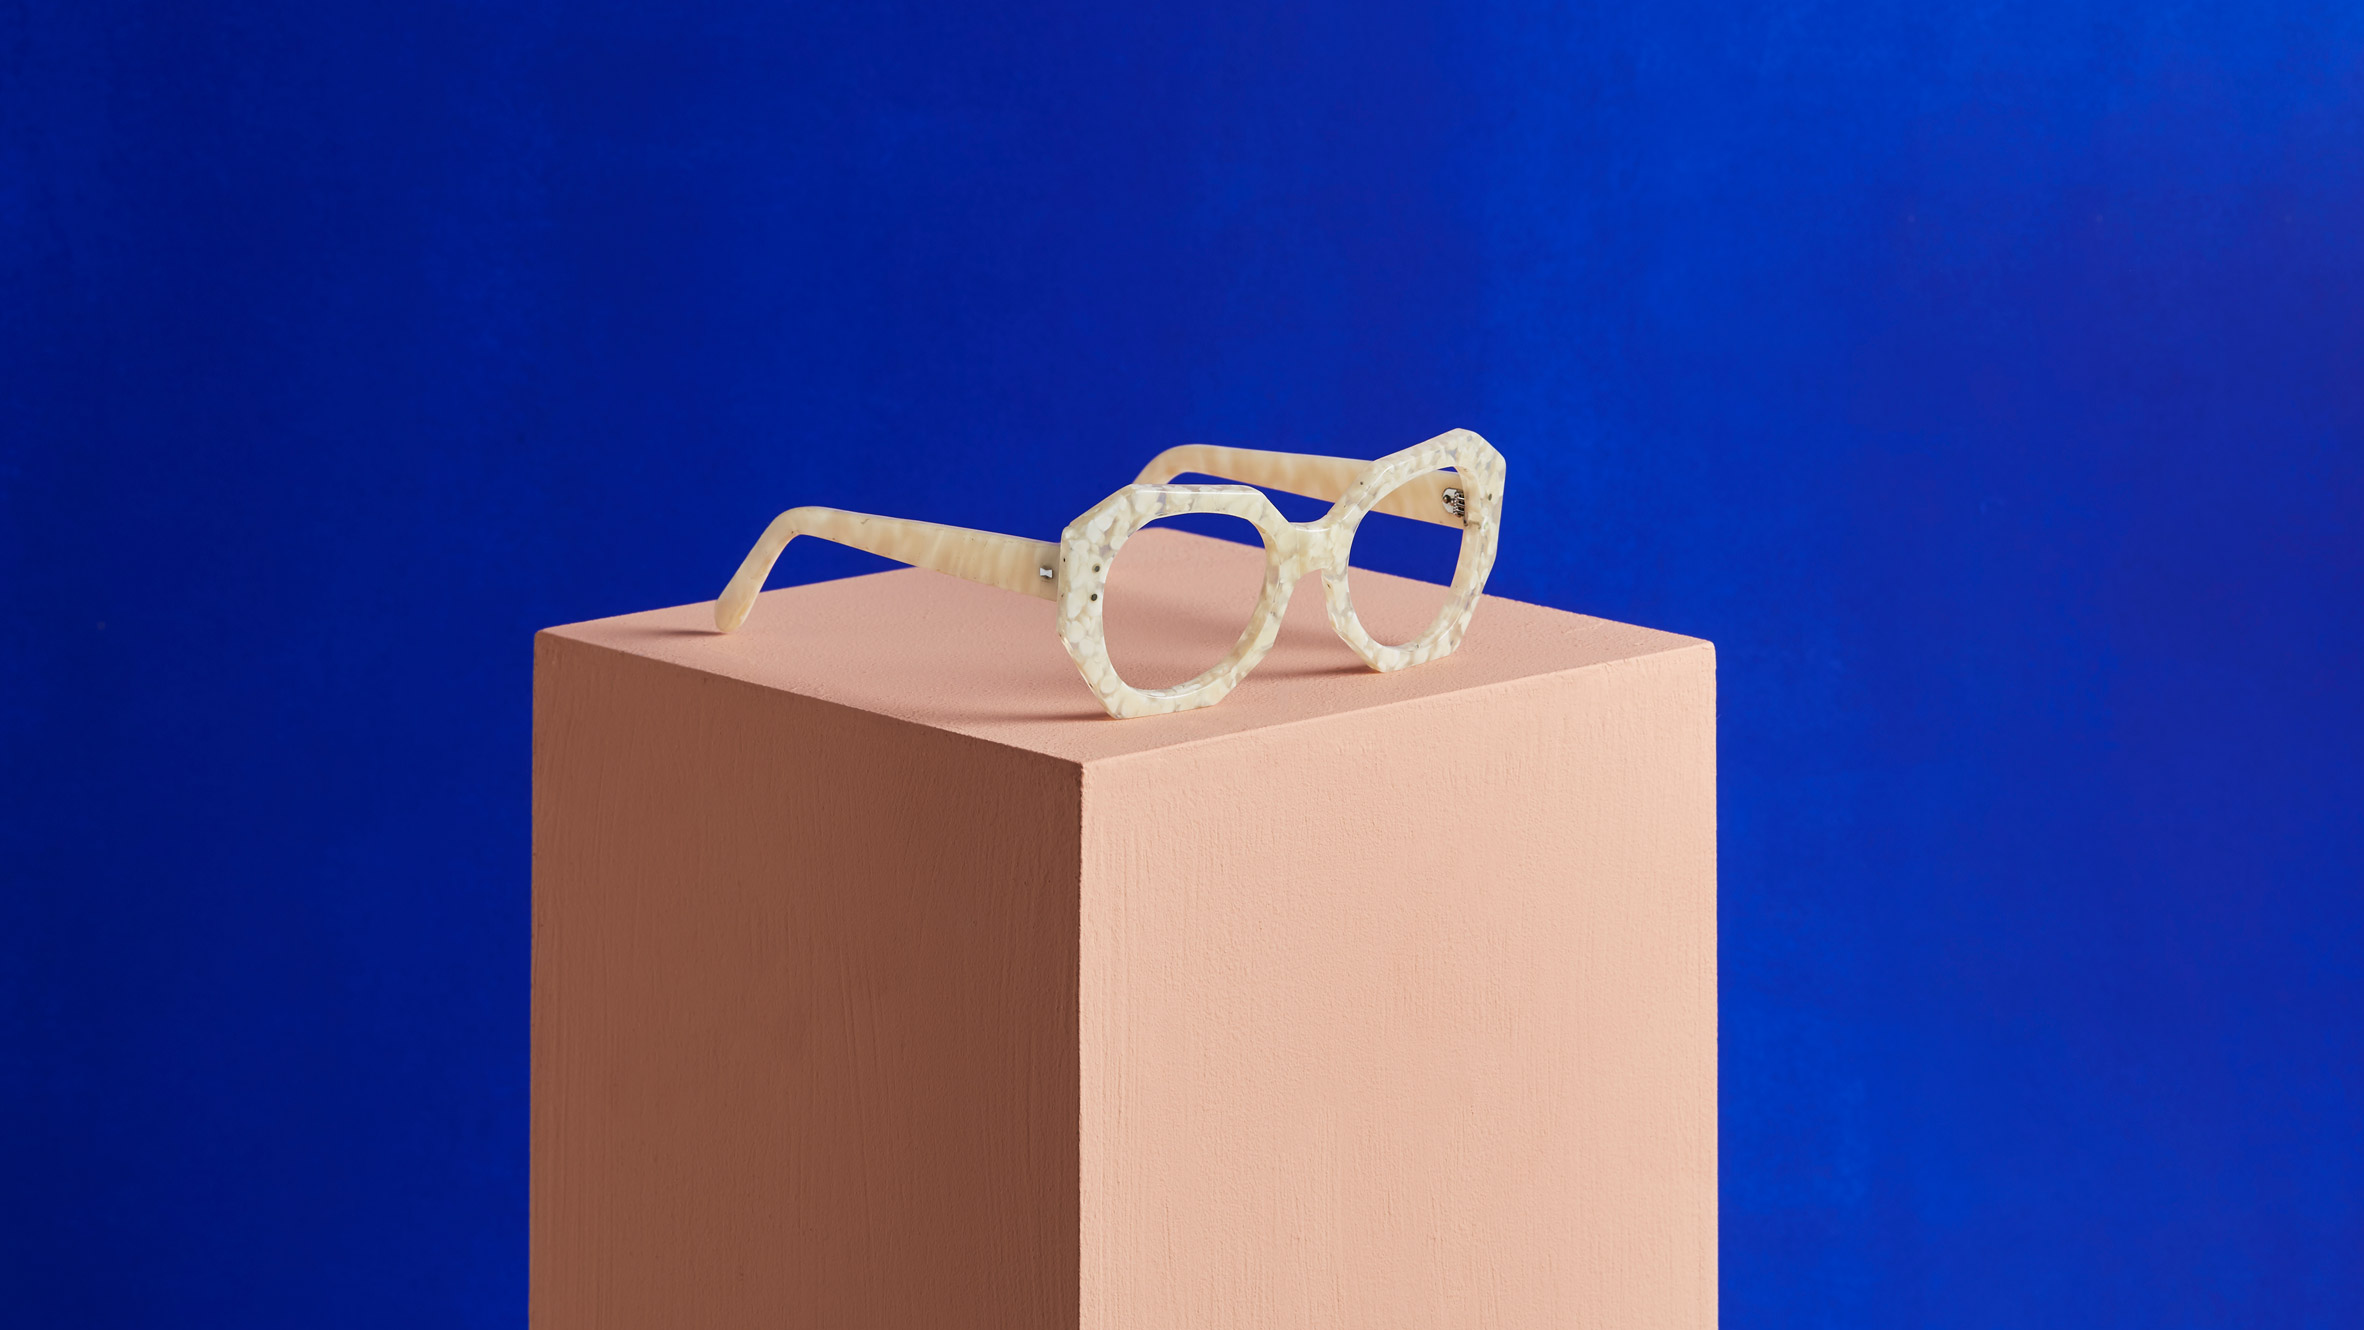 Louis Vuitton Sunglasses, Packaging Type : Paper Box, Plastic Box